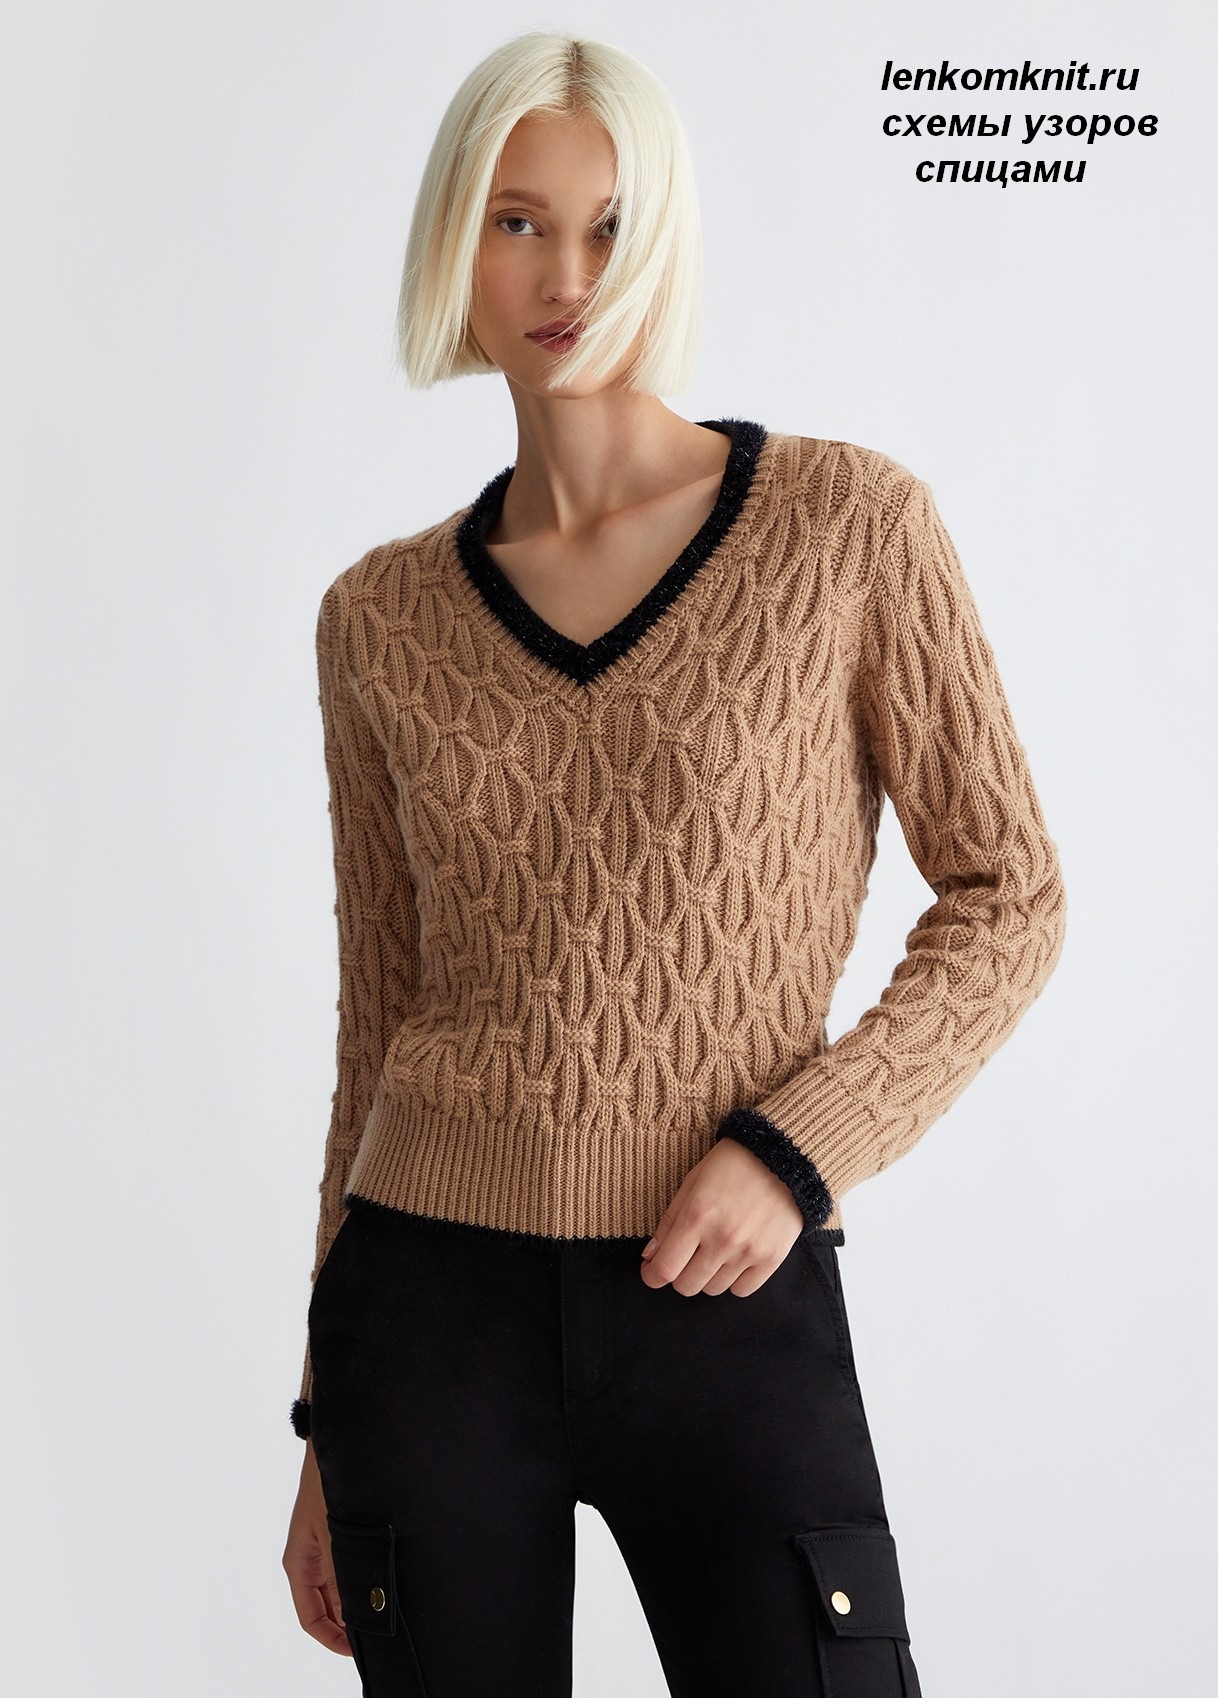 Пуловер от Liu Jo. Схема узора